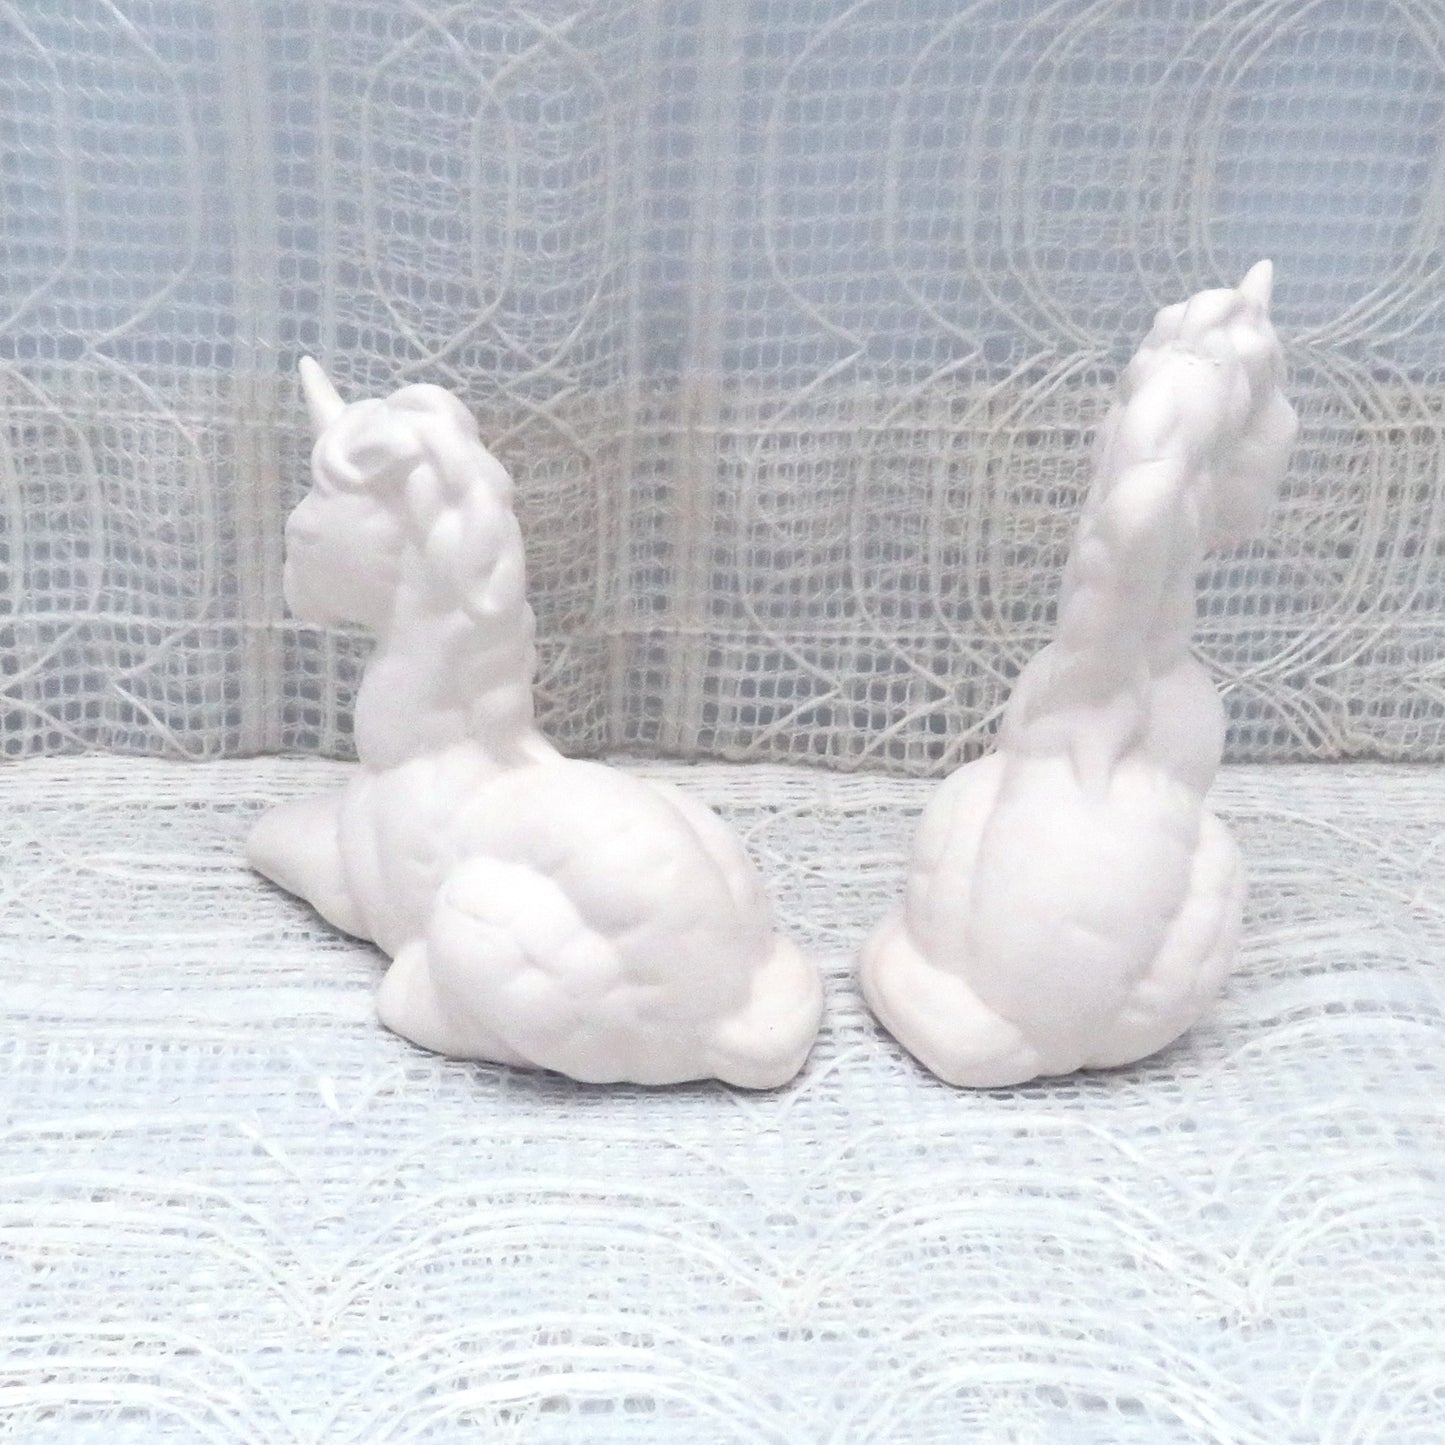 Unpainted Ceramic Unicorn Figurine, Ready to Paint, Unicorn Statue, Unicorn Decor, Paintable Ceramics, Ceramics to Paint, Unicorn Gift